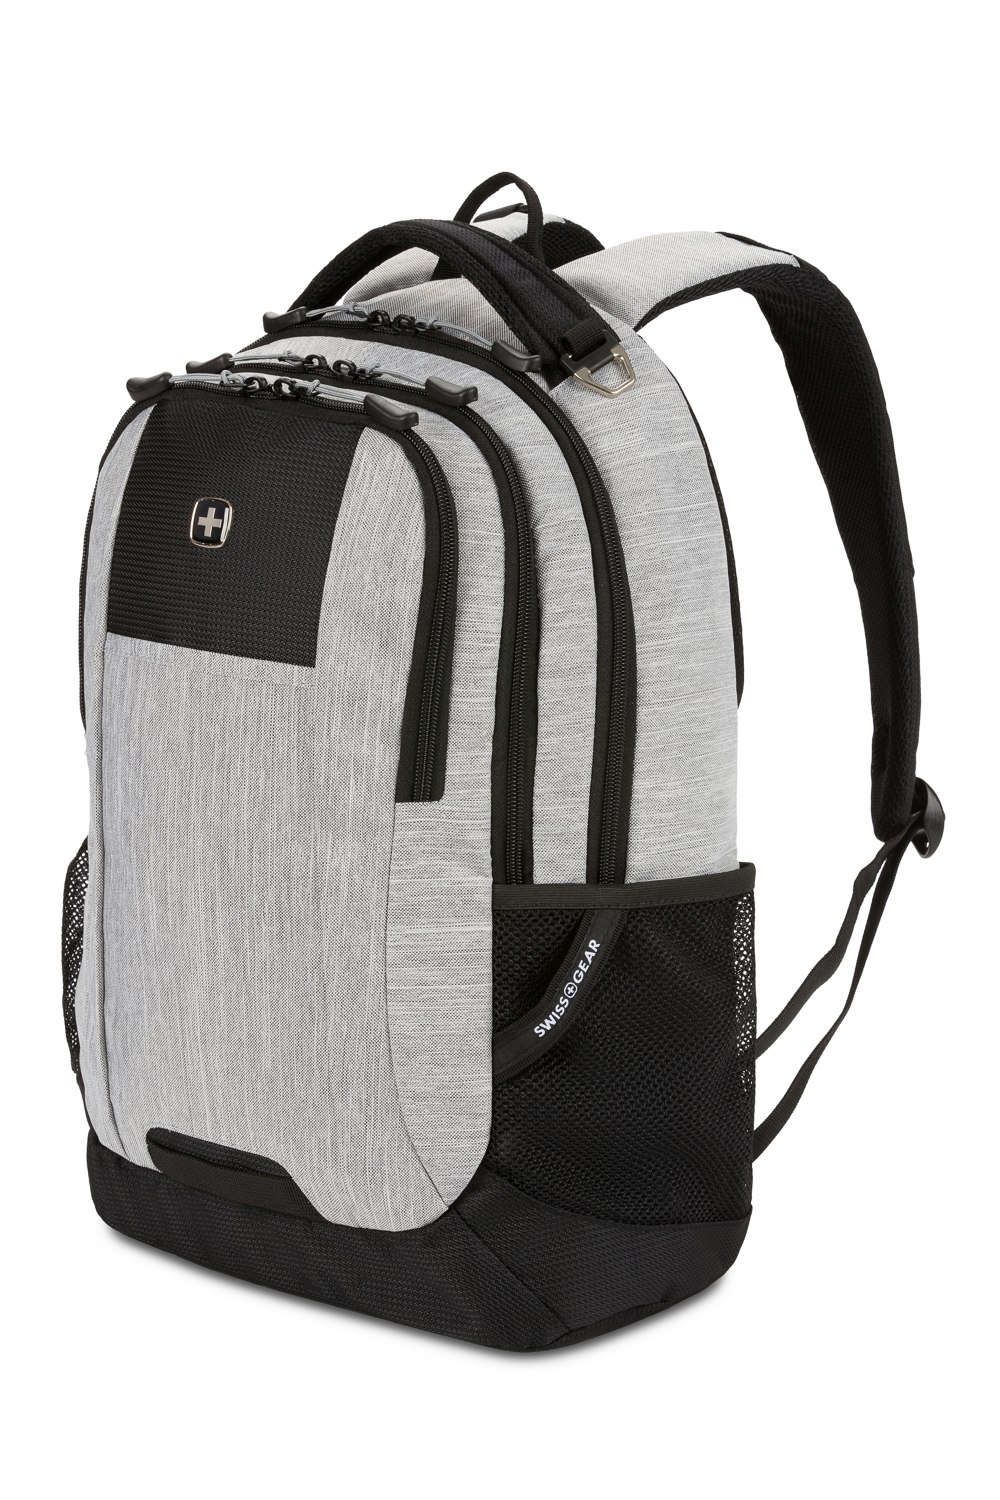 Swissgear 5505 Laptop Backpack Special Edition Light Grey Heather  Black